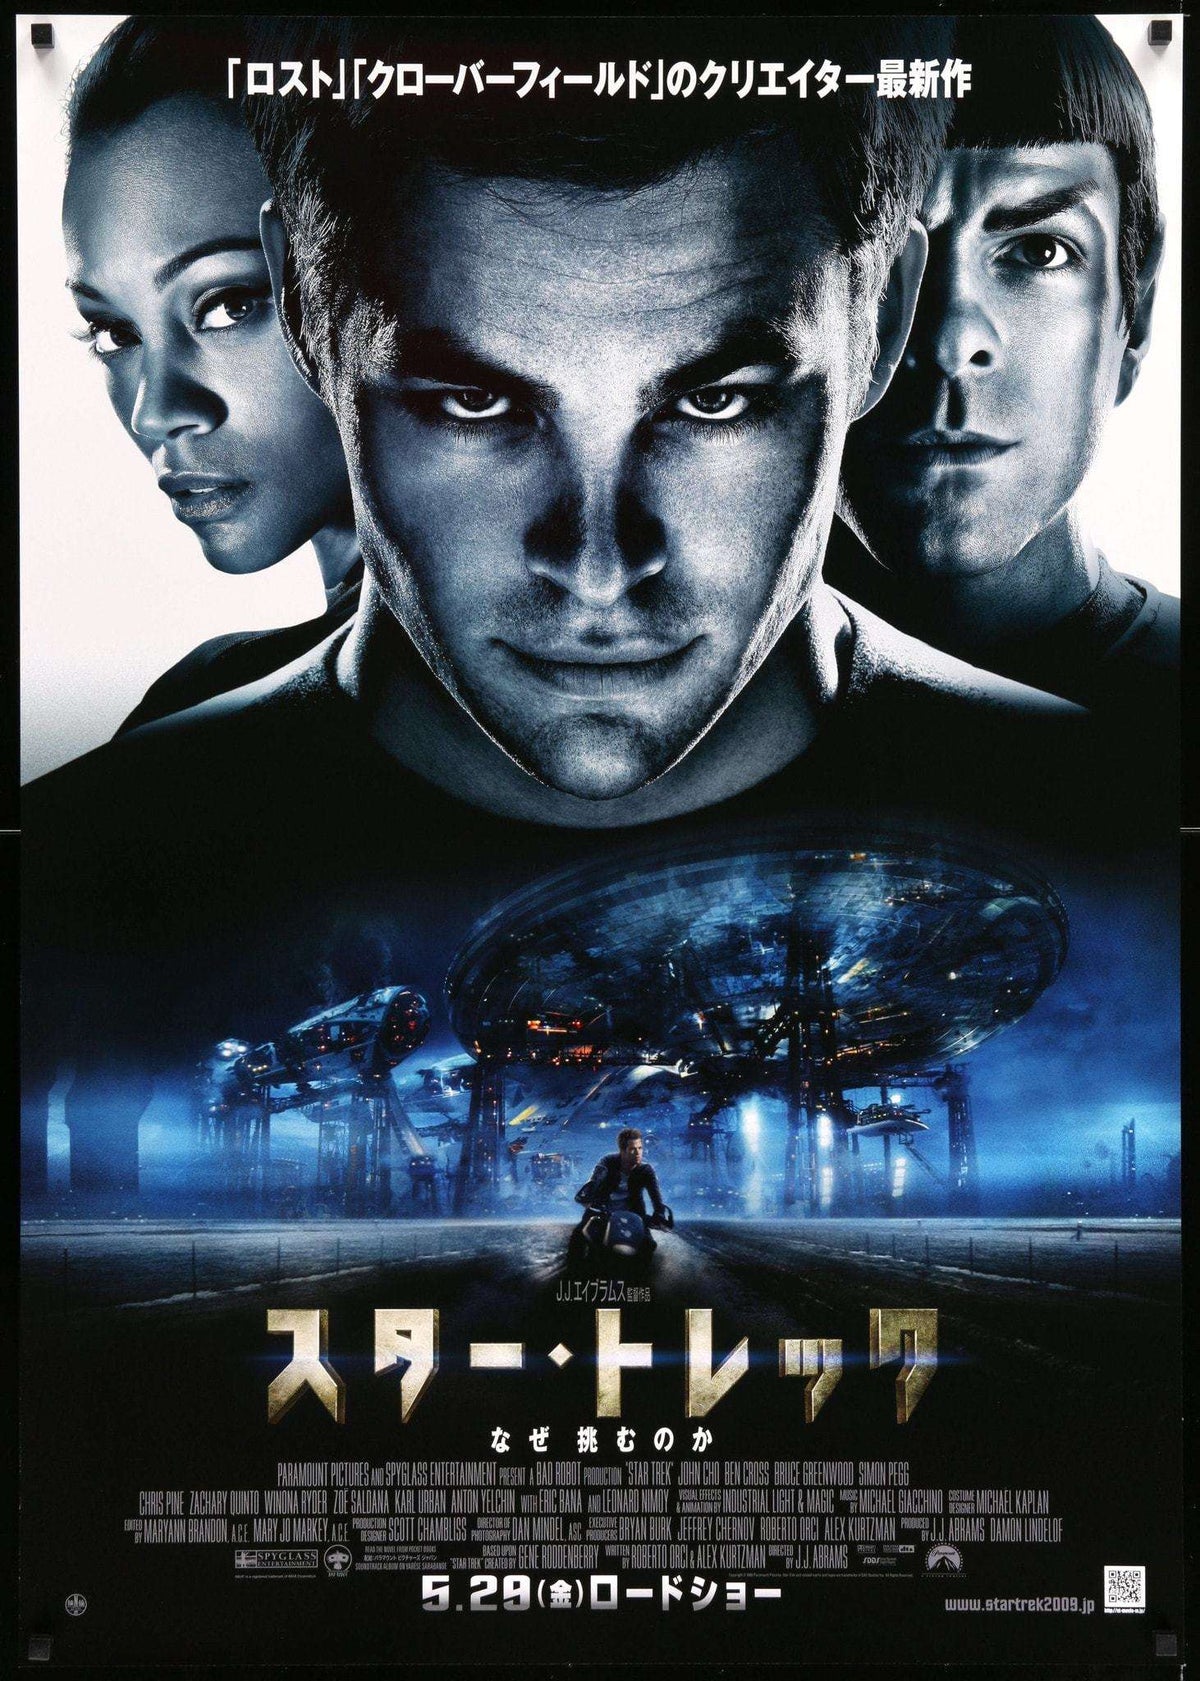 Star Trek (2009) original movie poster for sale at Original Film Art